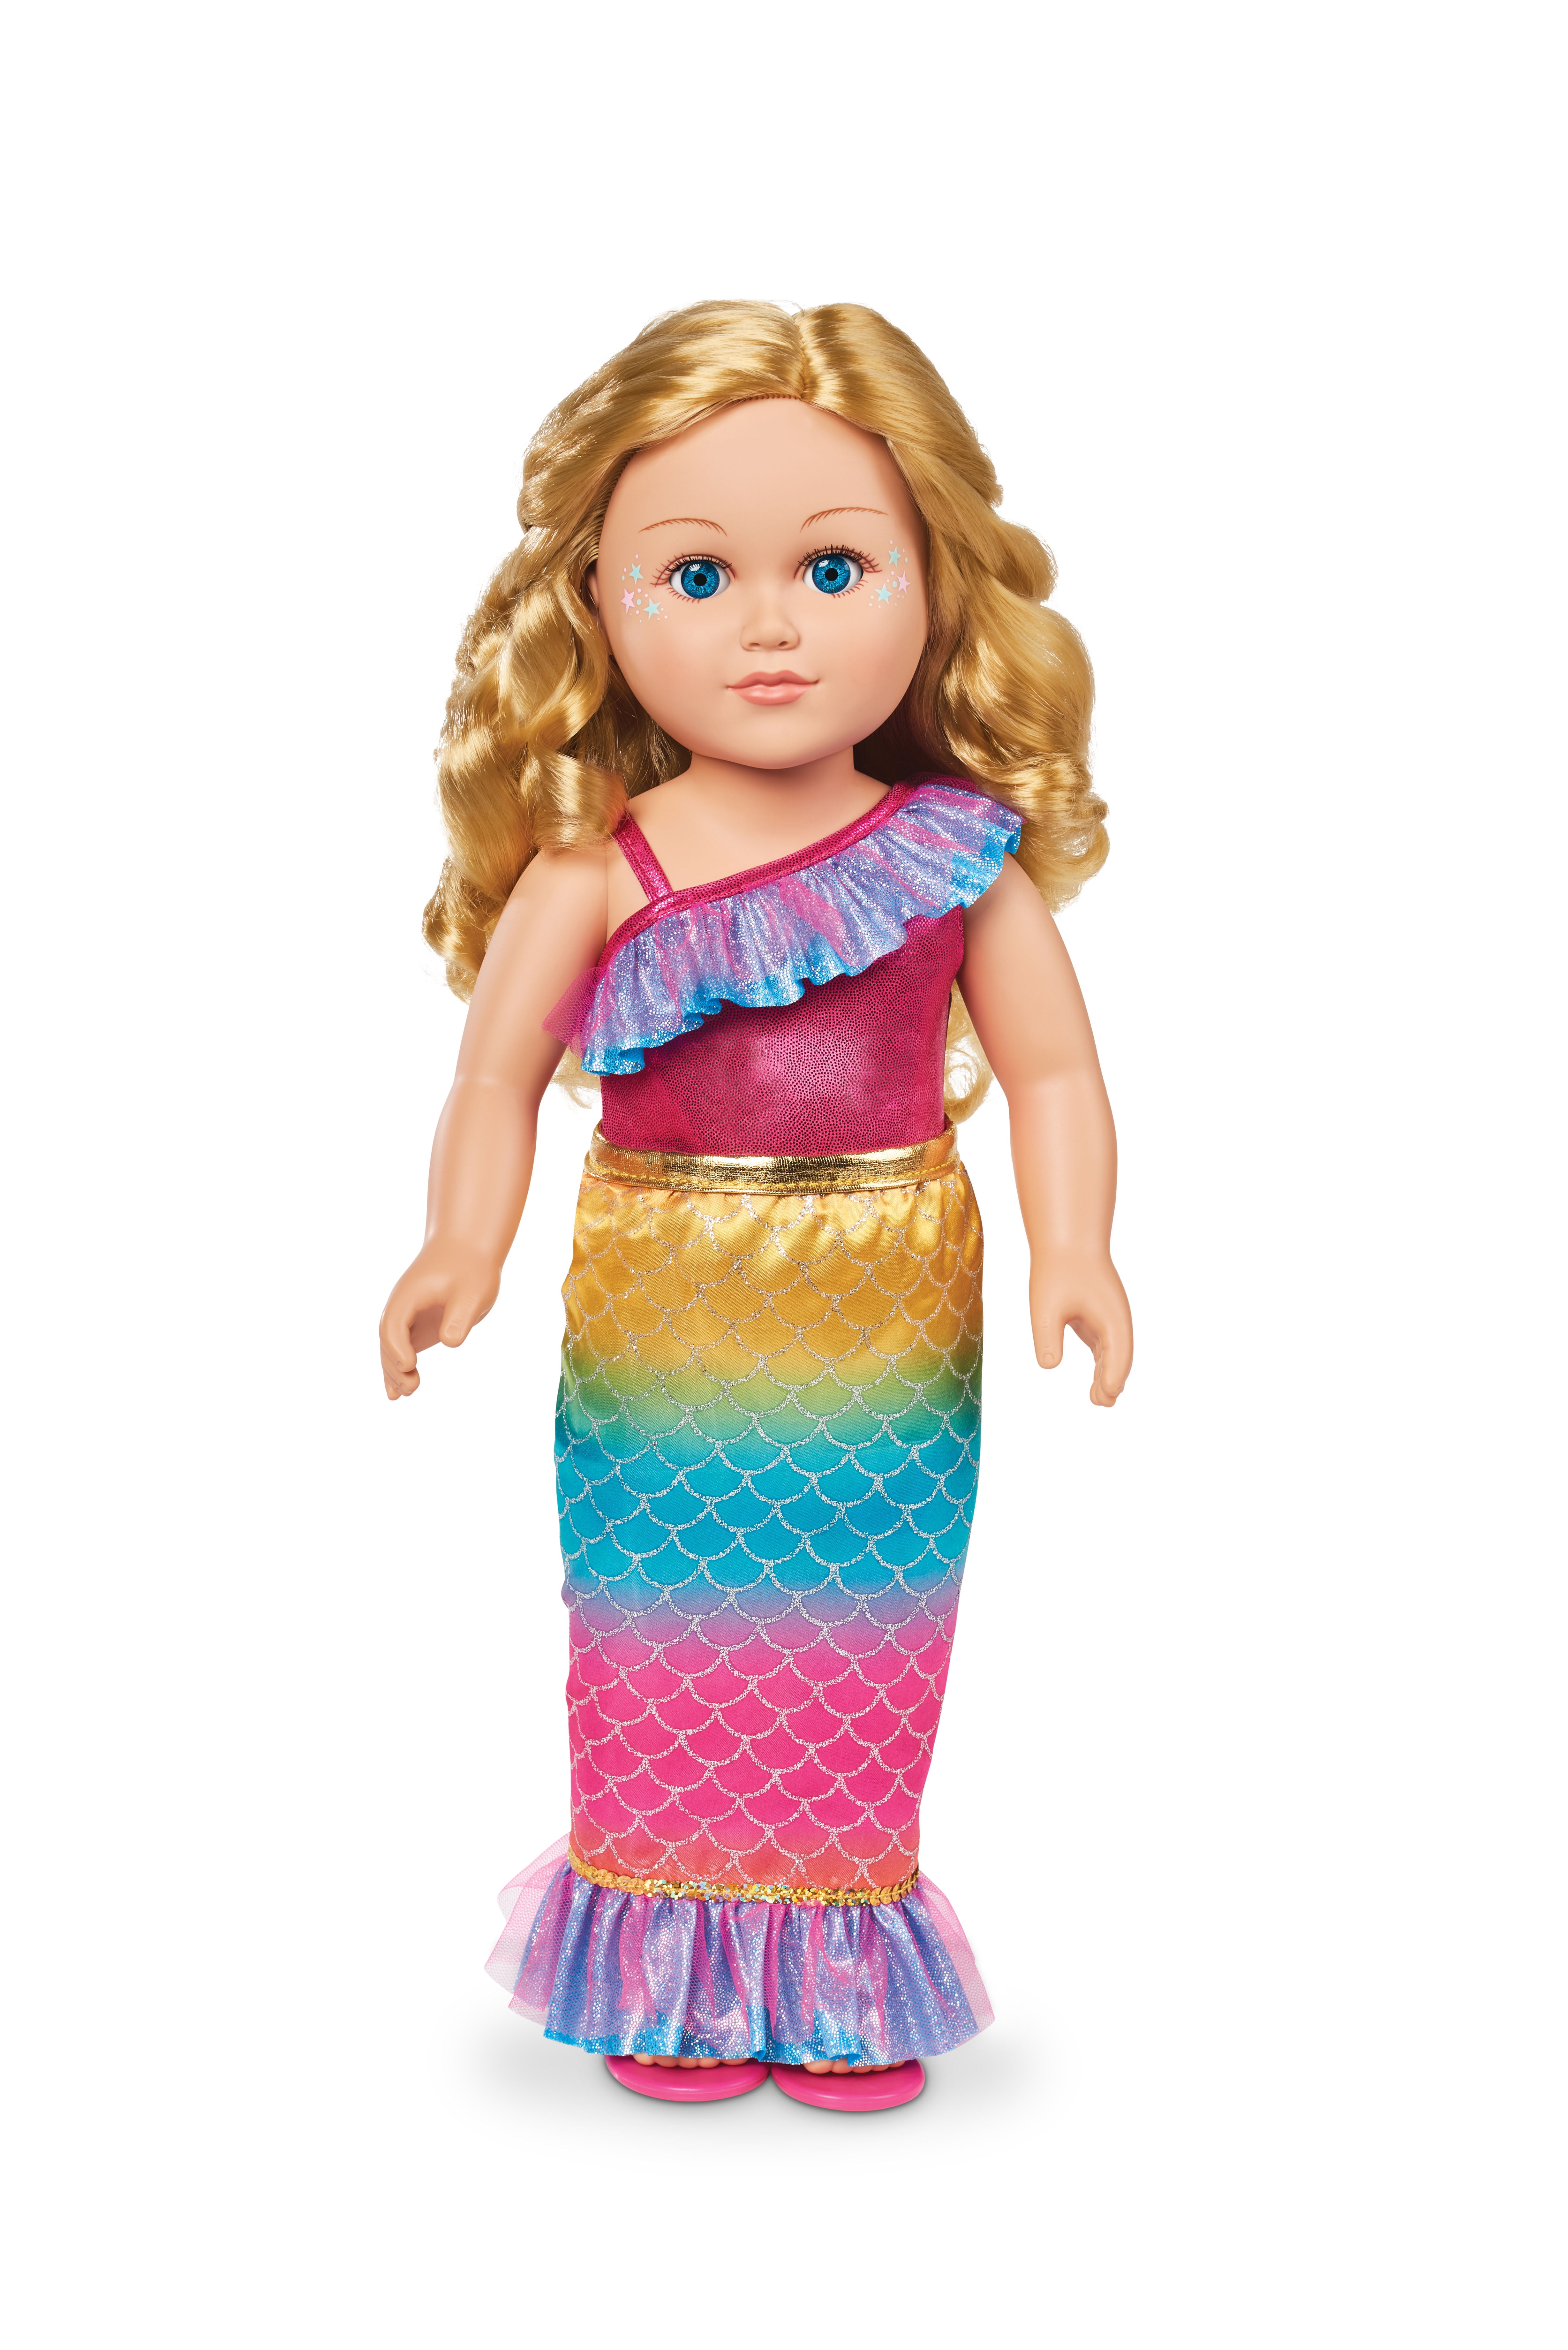 Swimming Mermaid Princess Doll Girls Toy Play Set Birthday Gift Children New 